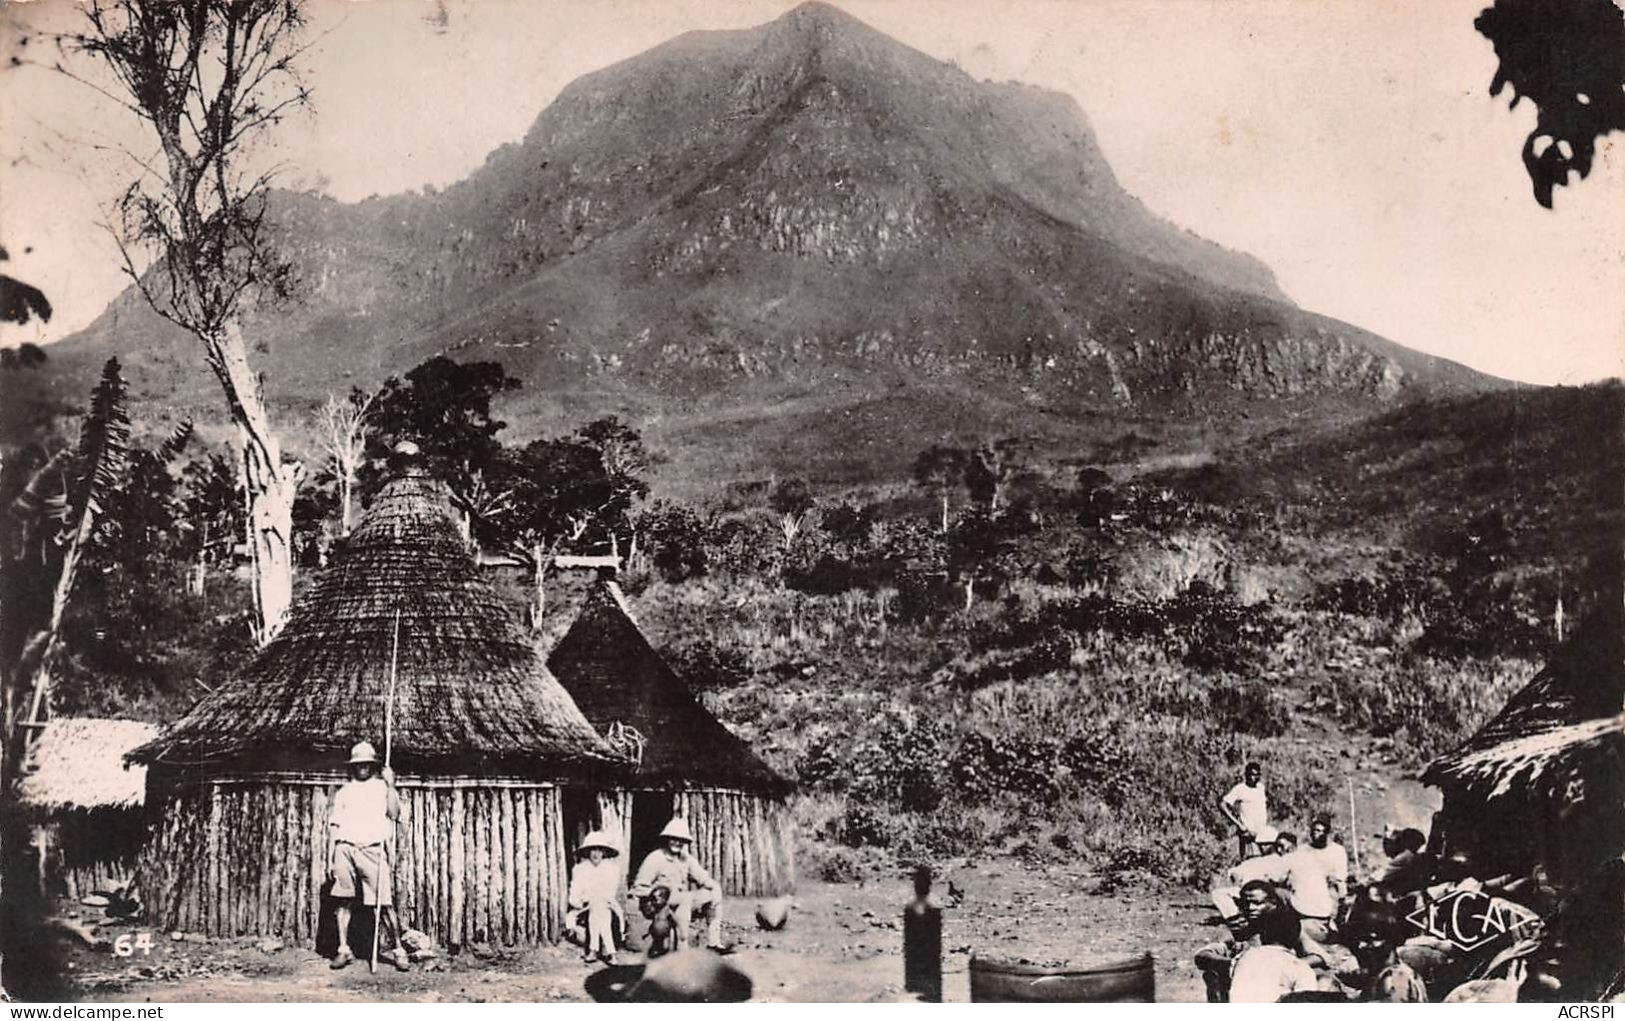 CAMEROUN  Circonscription De N'Kongsamba Montagne De Nenou   (Scan R/V) N°   7   \QQ1110Ter - Cameroun